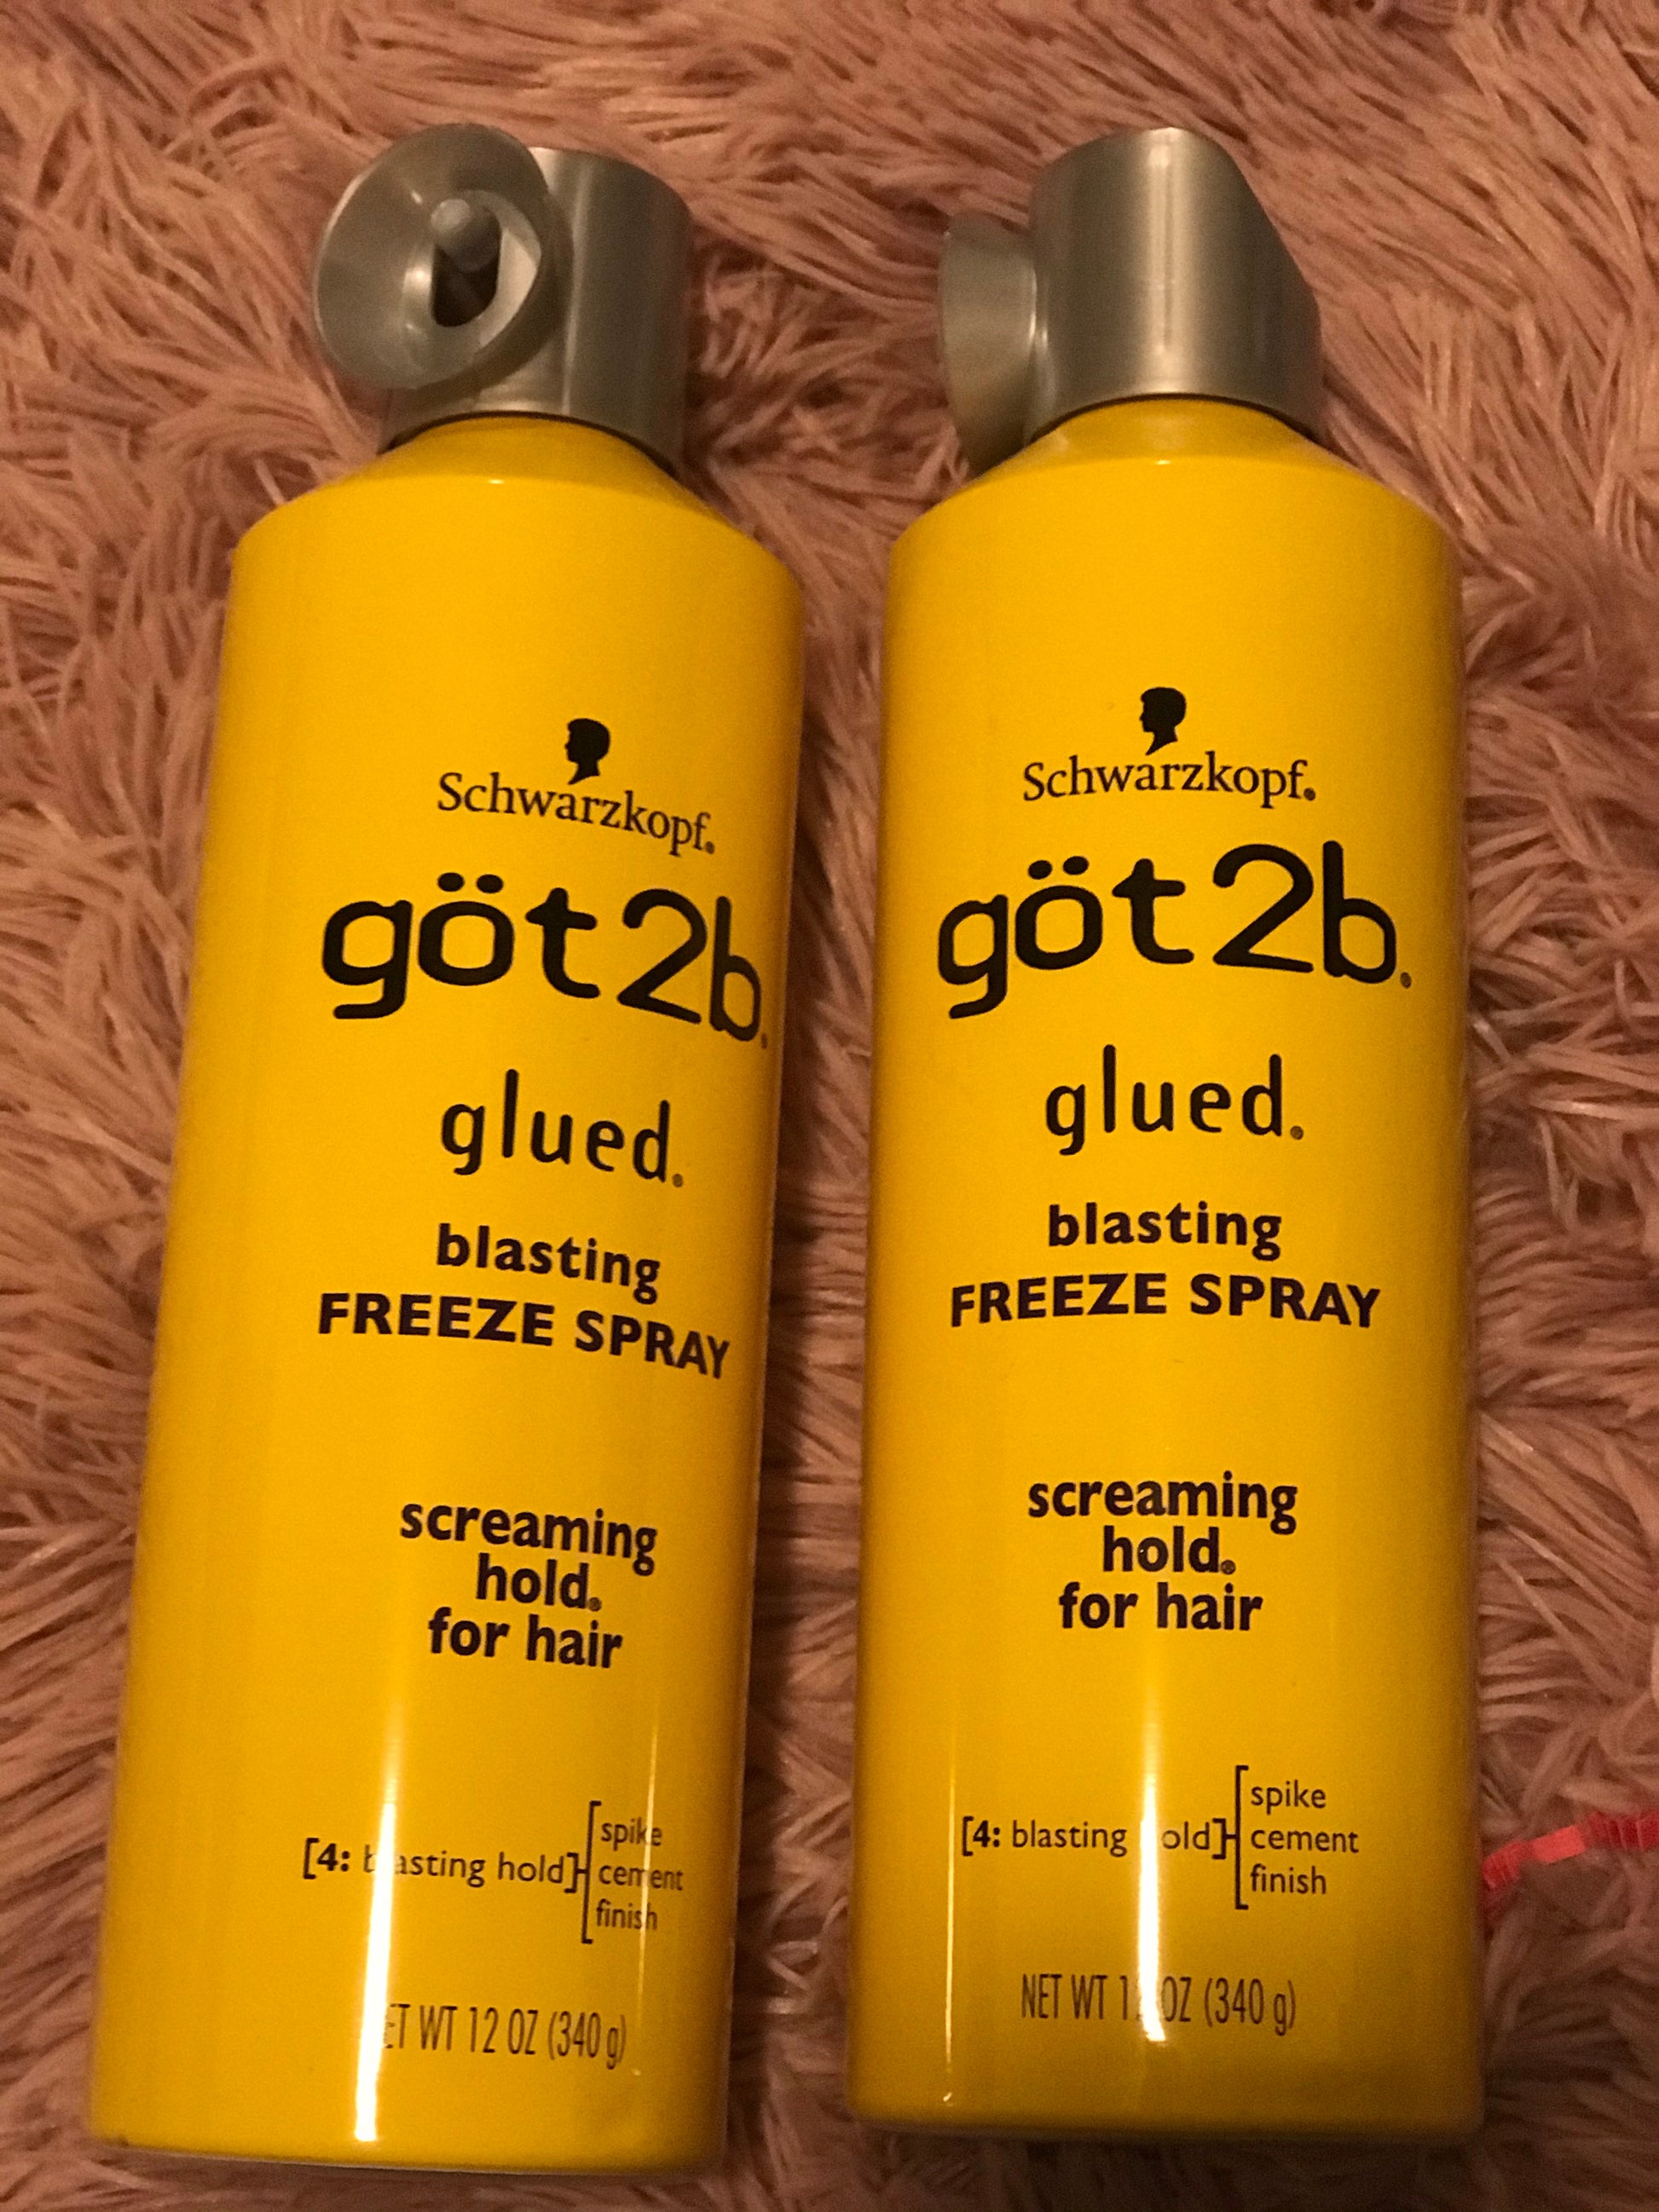 Professional Hair Styling Supplies | Got 2b Glued Freeze Stray | 2 for $18.99 | https://www.mydivinebeauty.biz